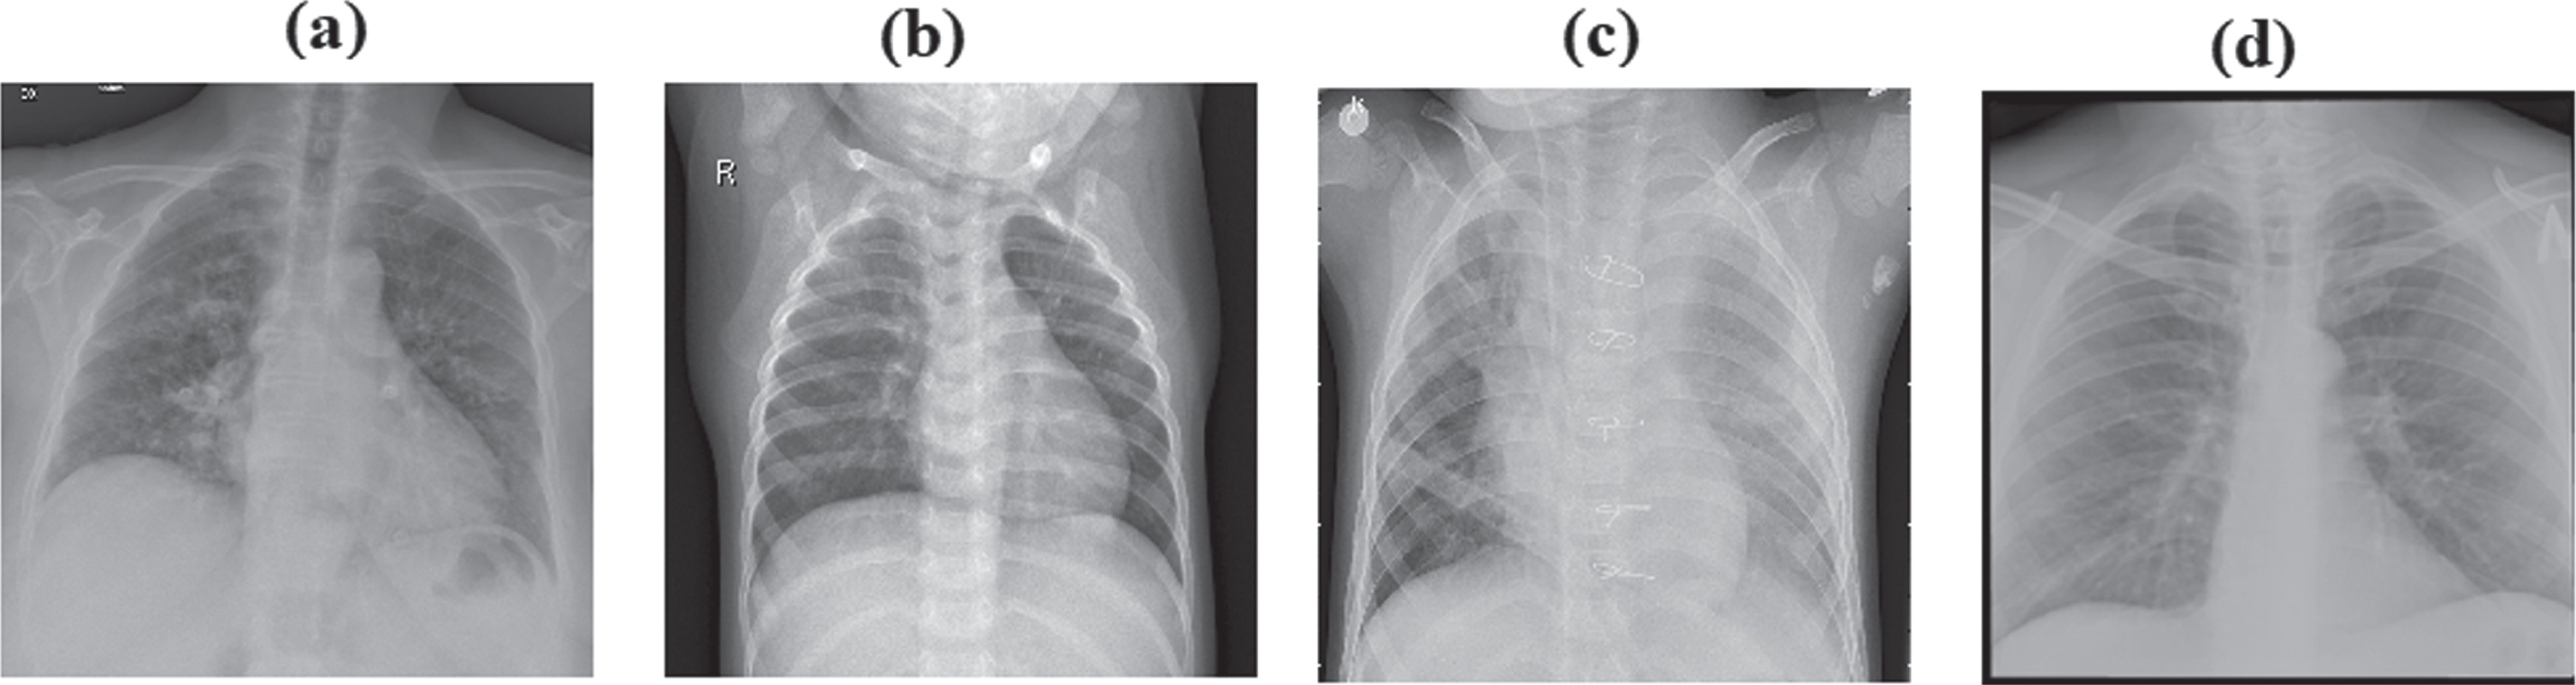 Samples from dataset a) Covid-19 (b) Normal (c) Pneumonia (d) Tuberculosis.